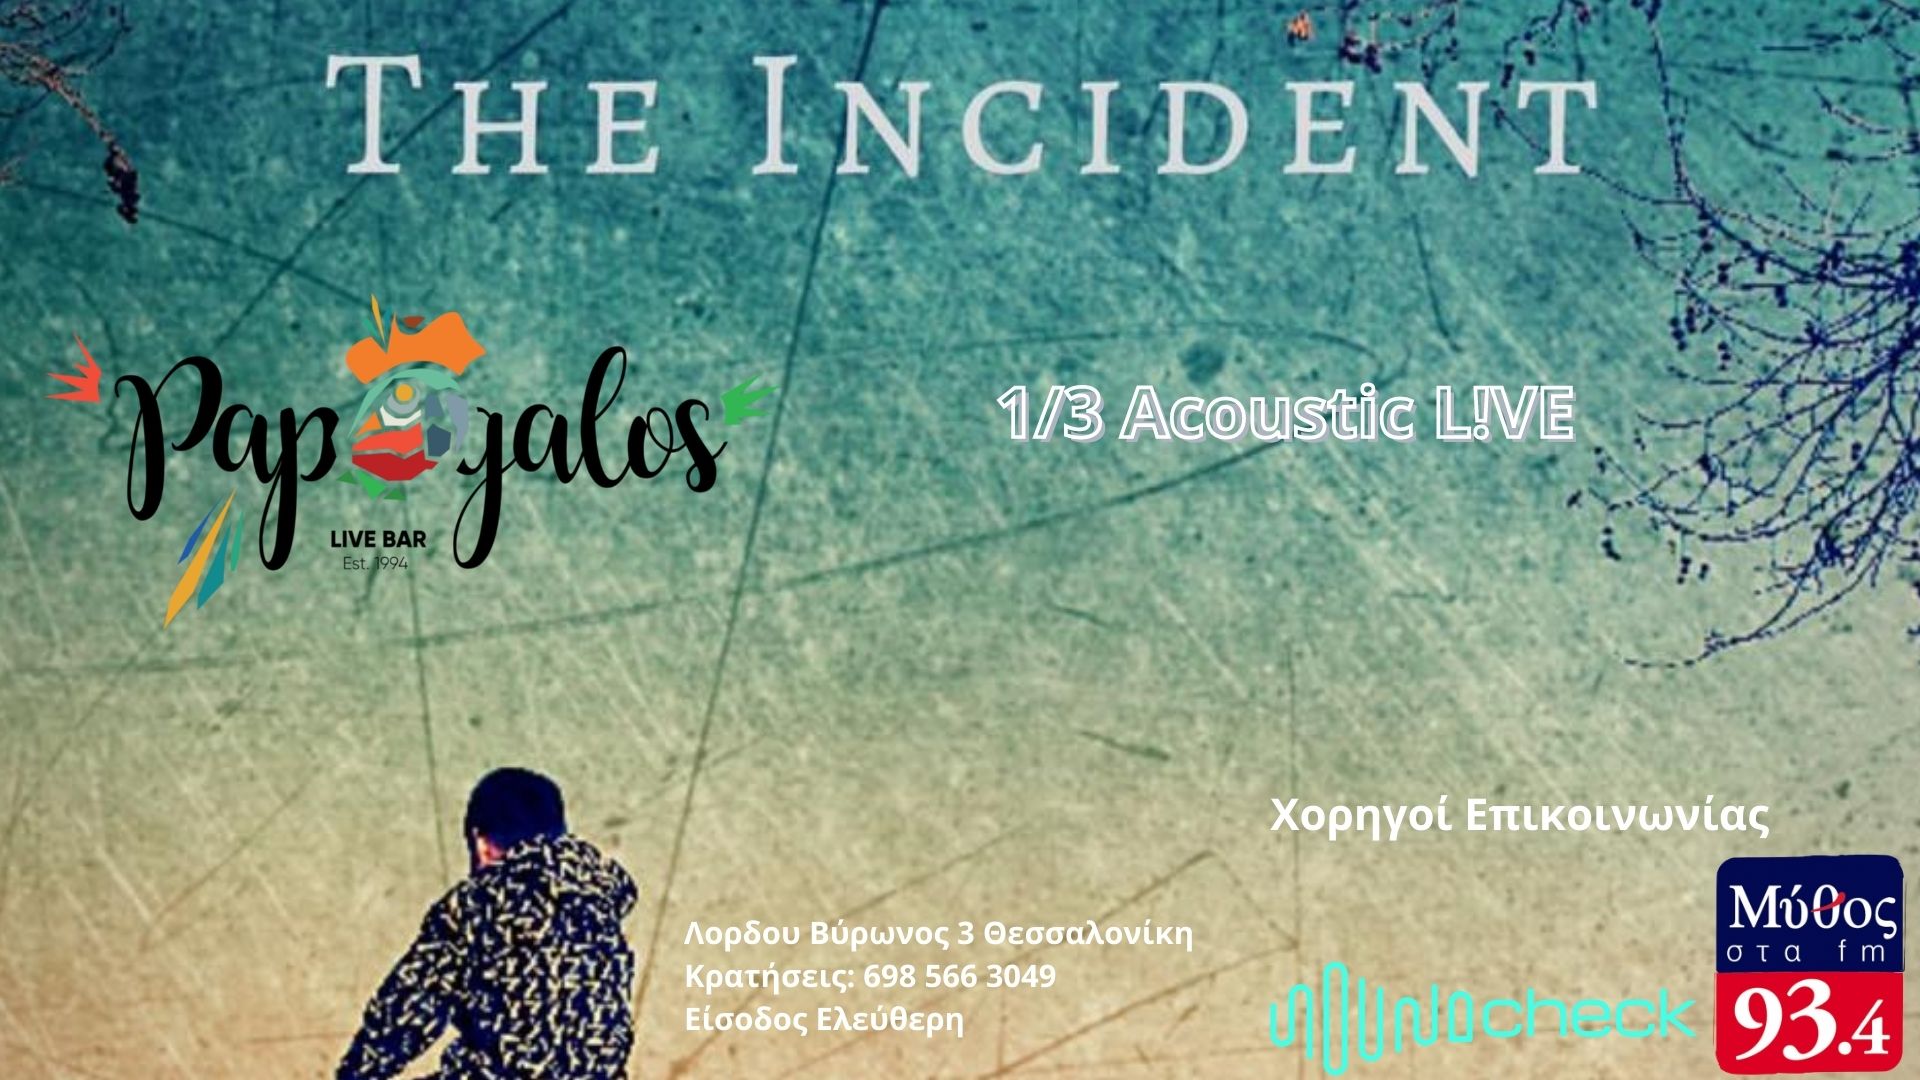 The Incident Acoustic Live στον Παπαγάλο 1/3